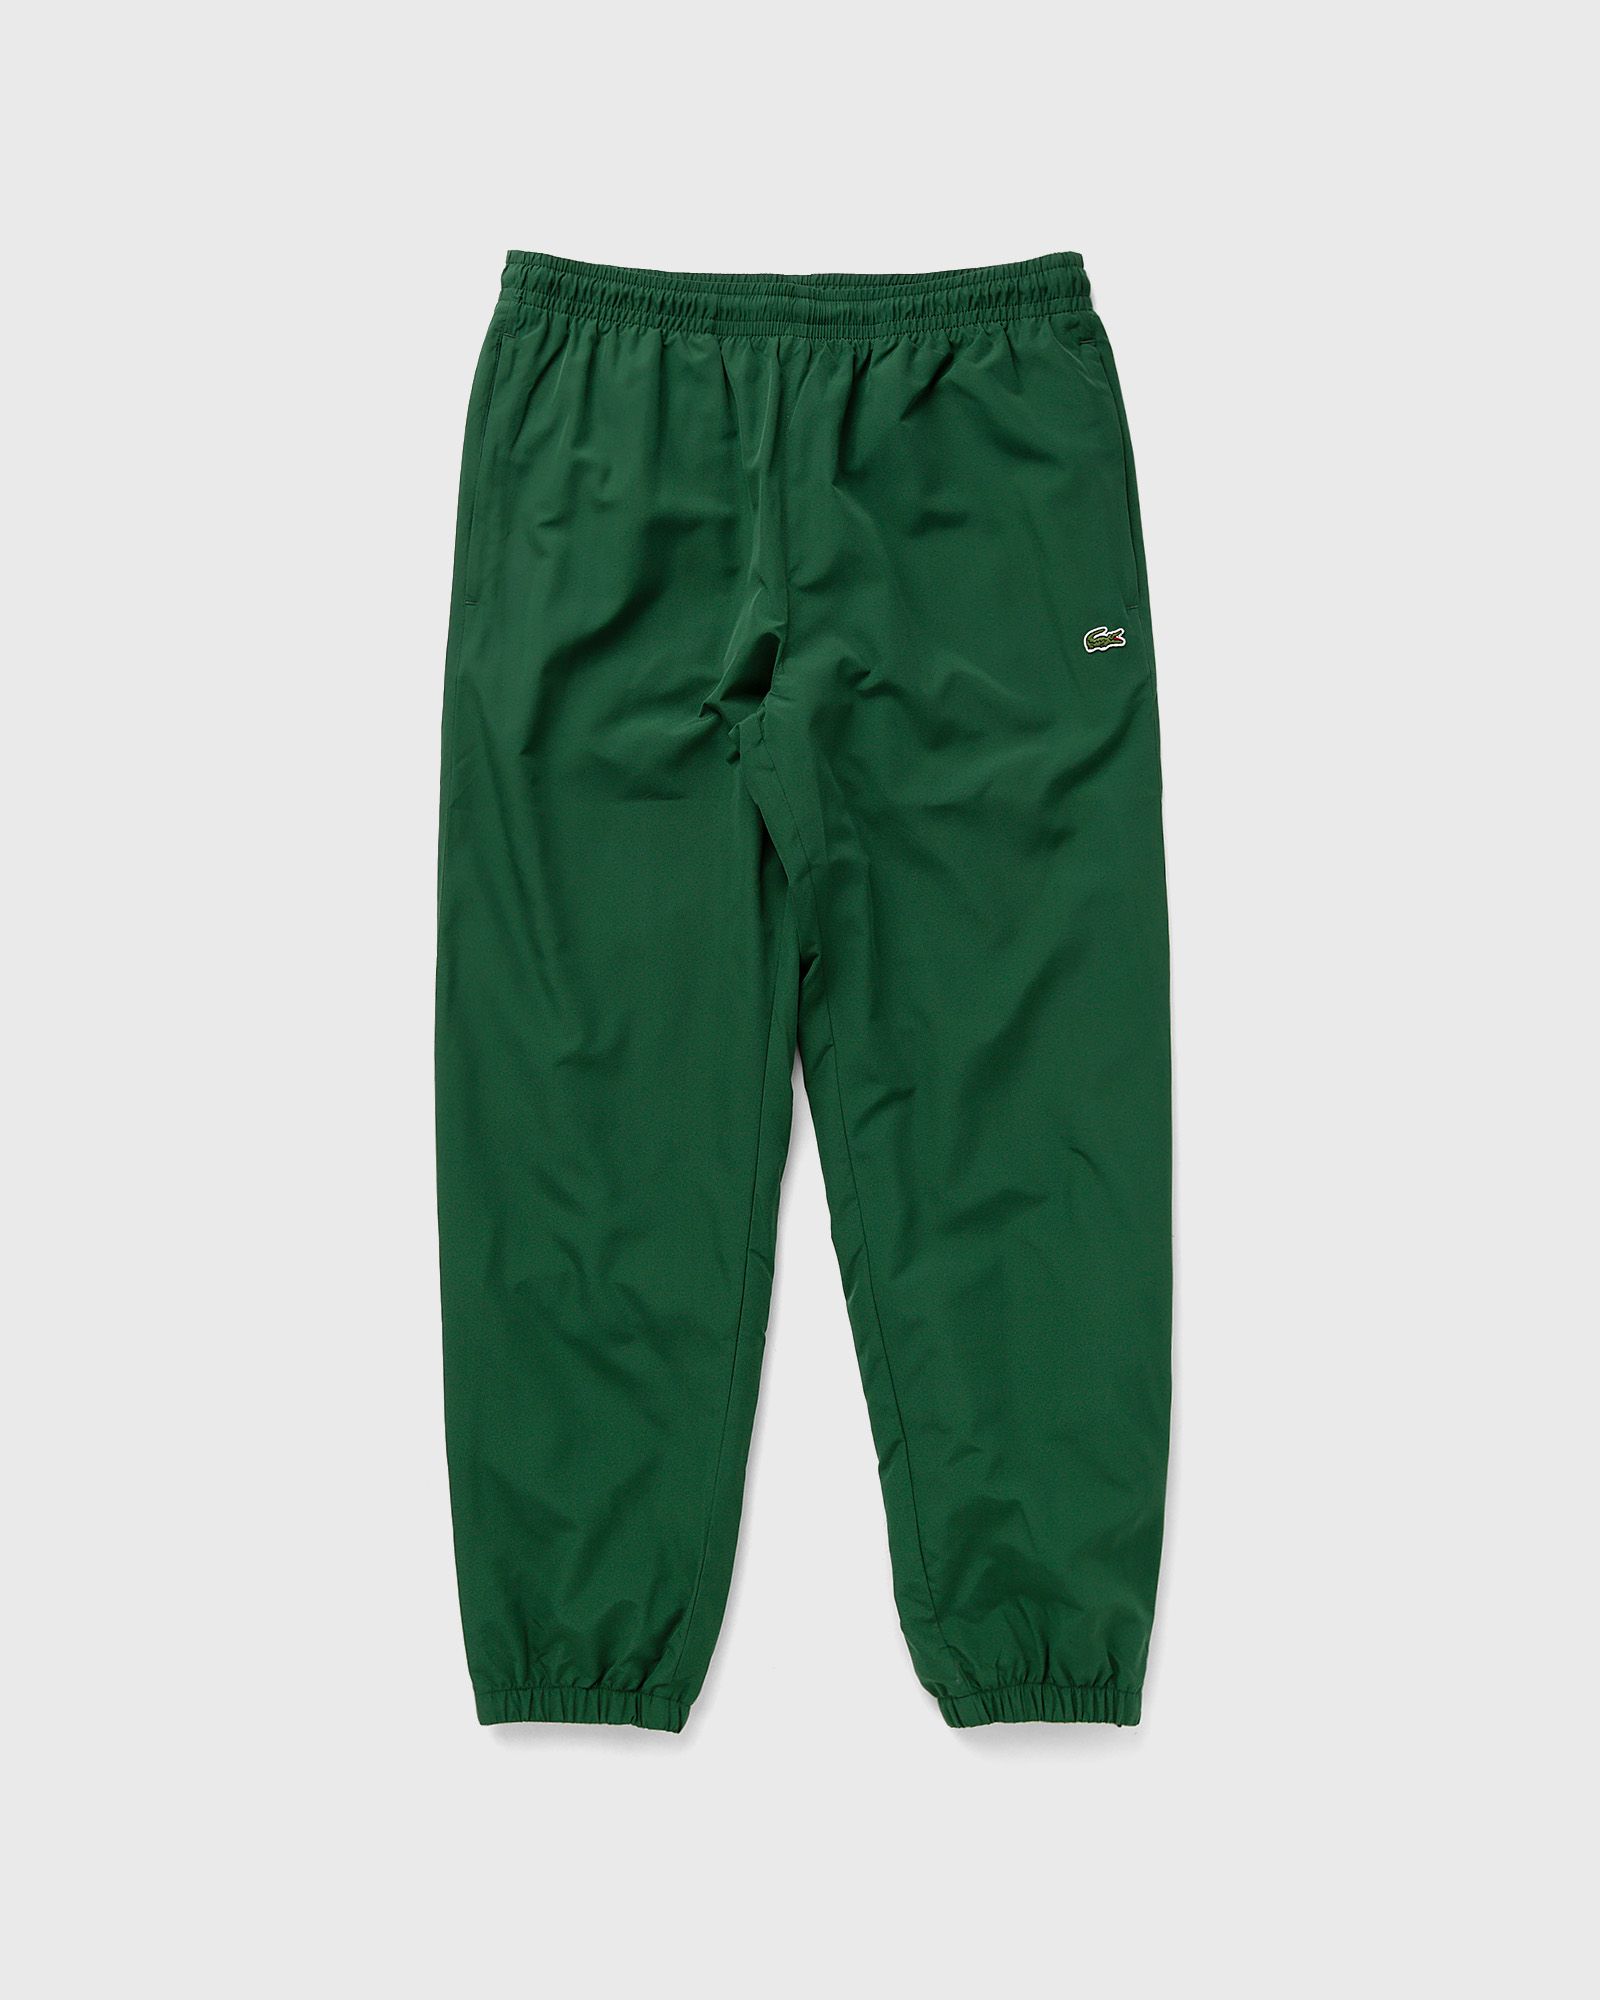 Lacoste TRAININGSHOSE men Track Pants green in Größe:L von Lacoste